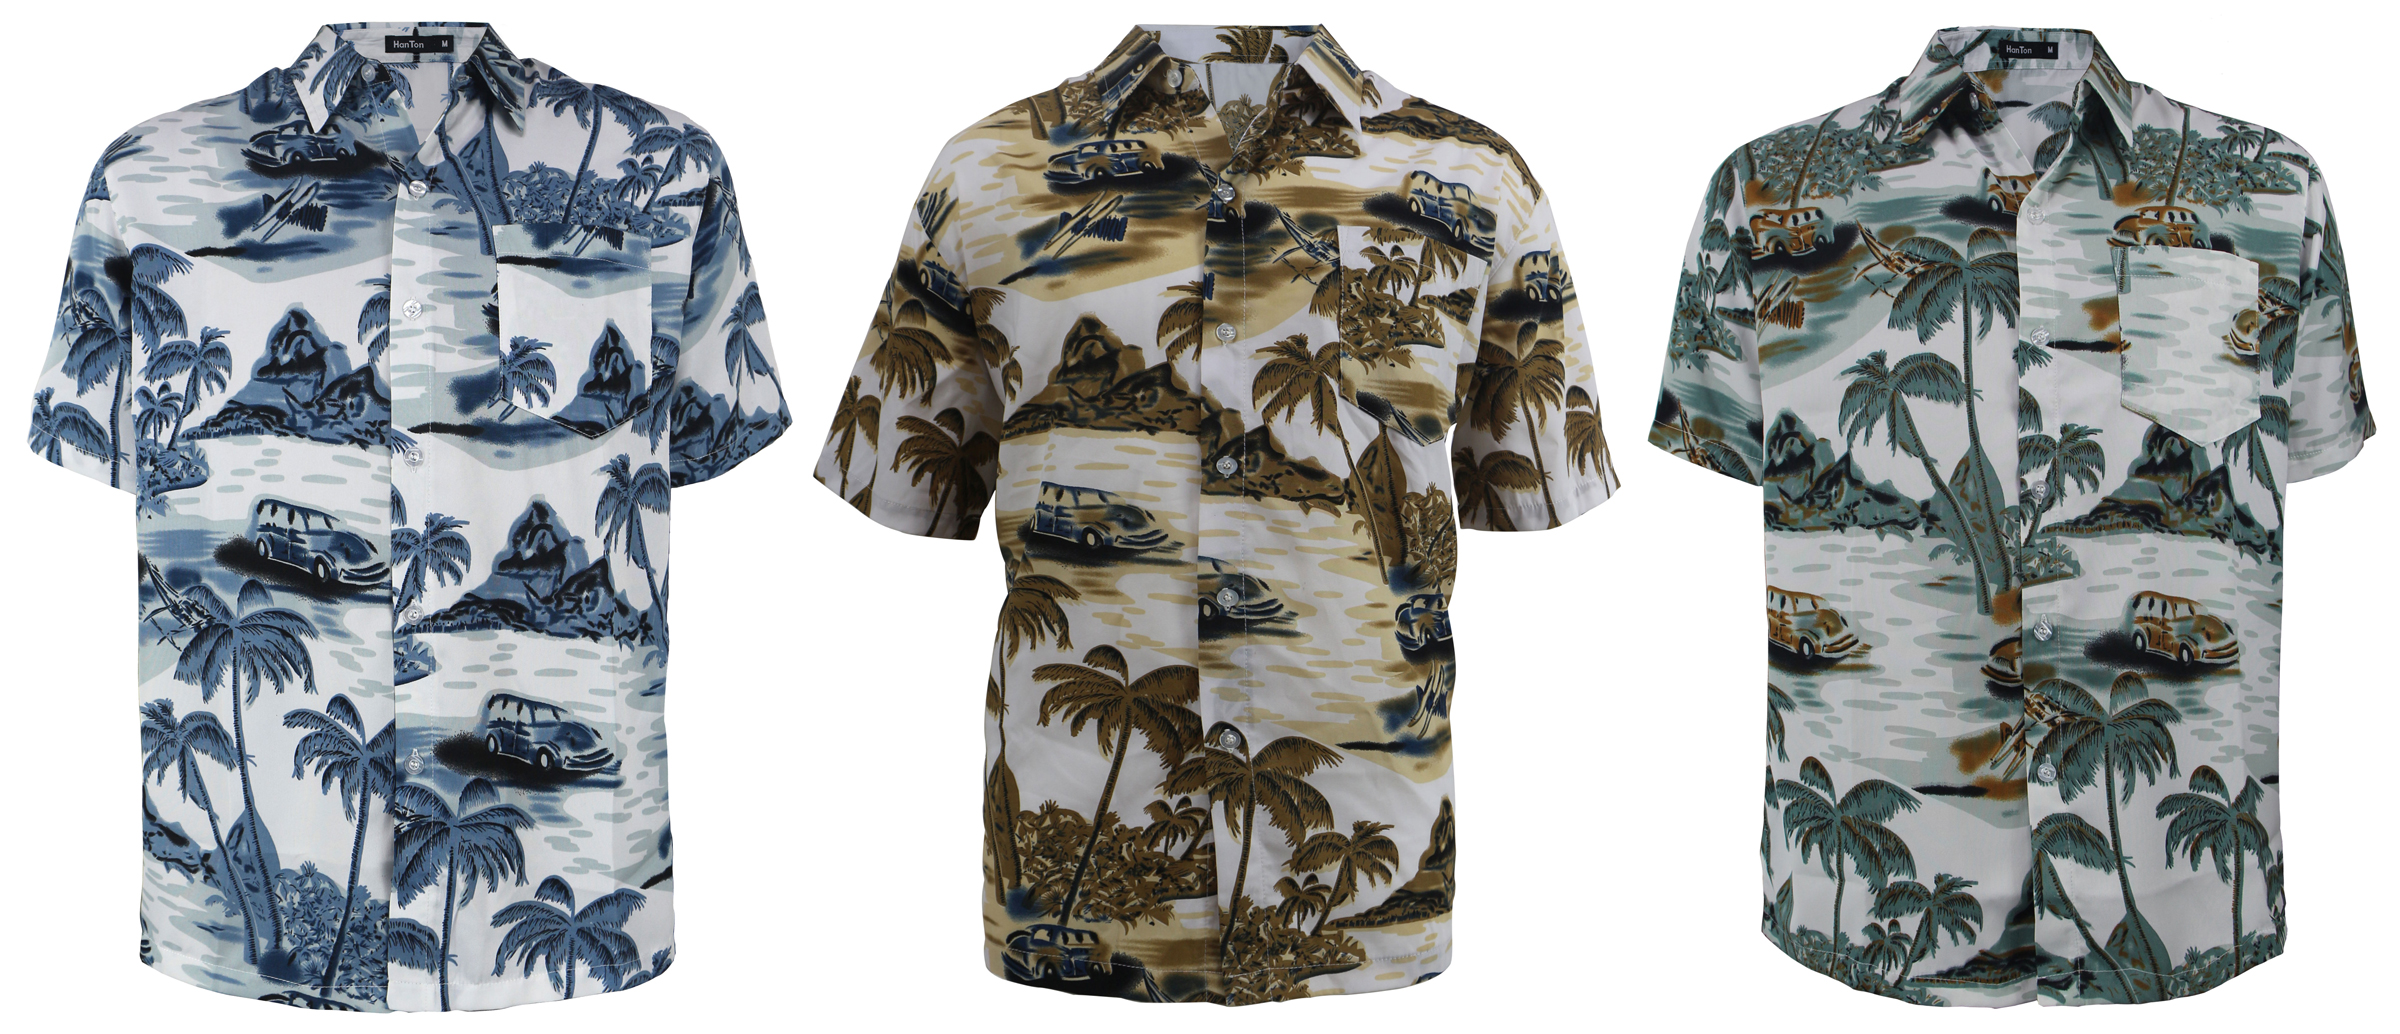 Men's Hawaiian SHIRTs w/ Front Pocket - Palm Tree Prints - Sizes Small-2X